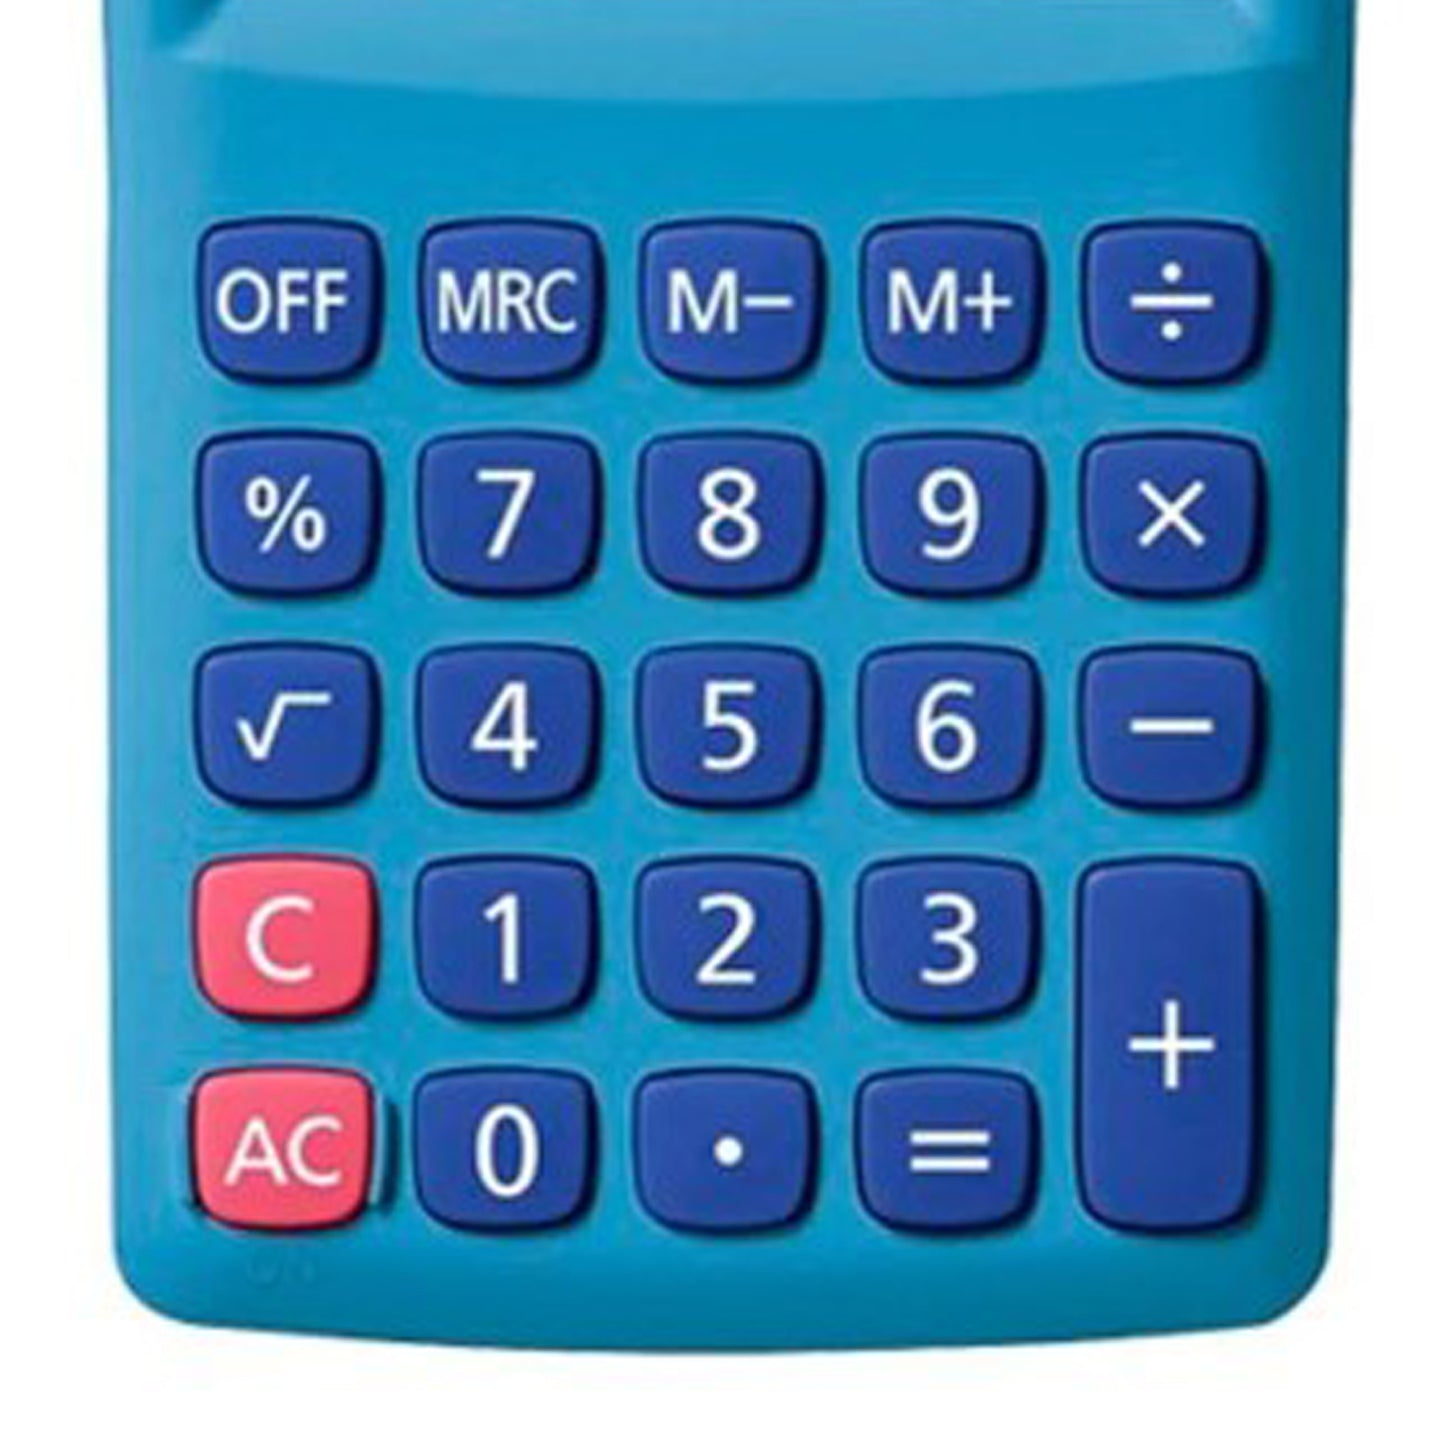 Calculadora De Bolsillo Casio HL-815L-BU Azul - Crazygames